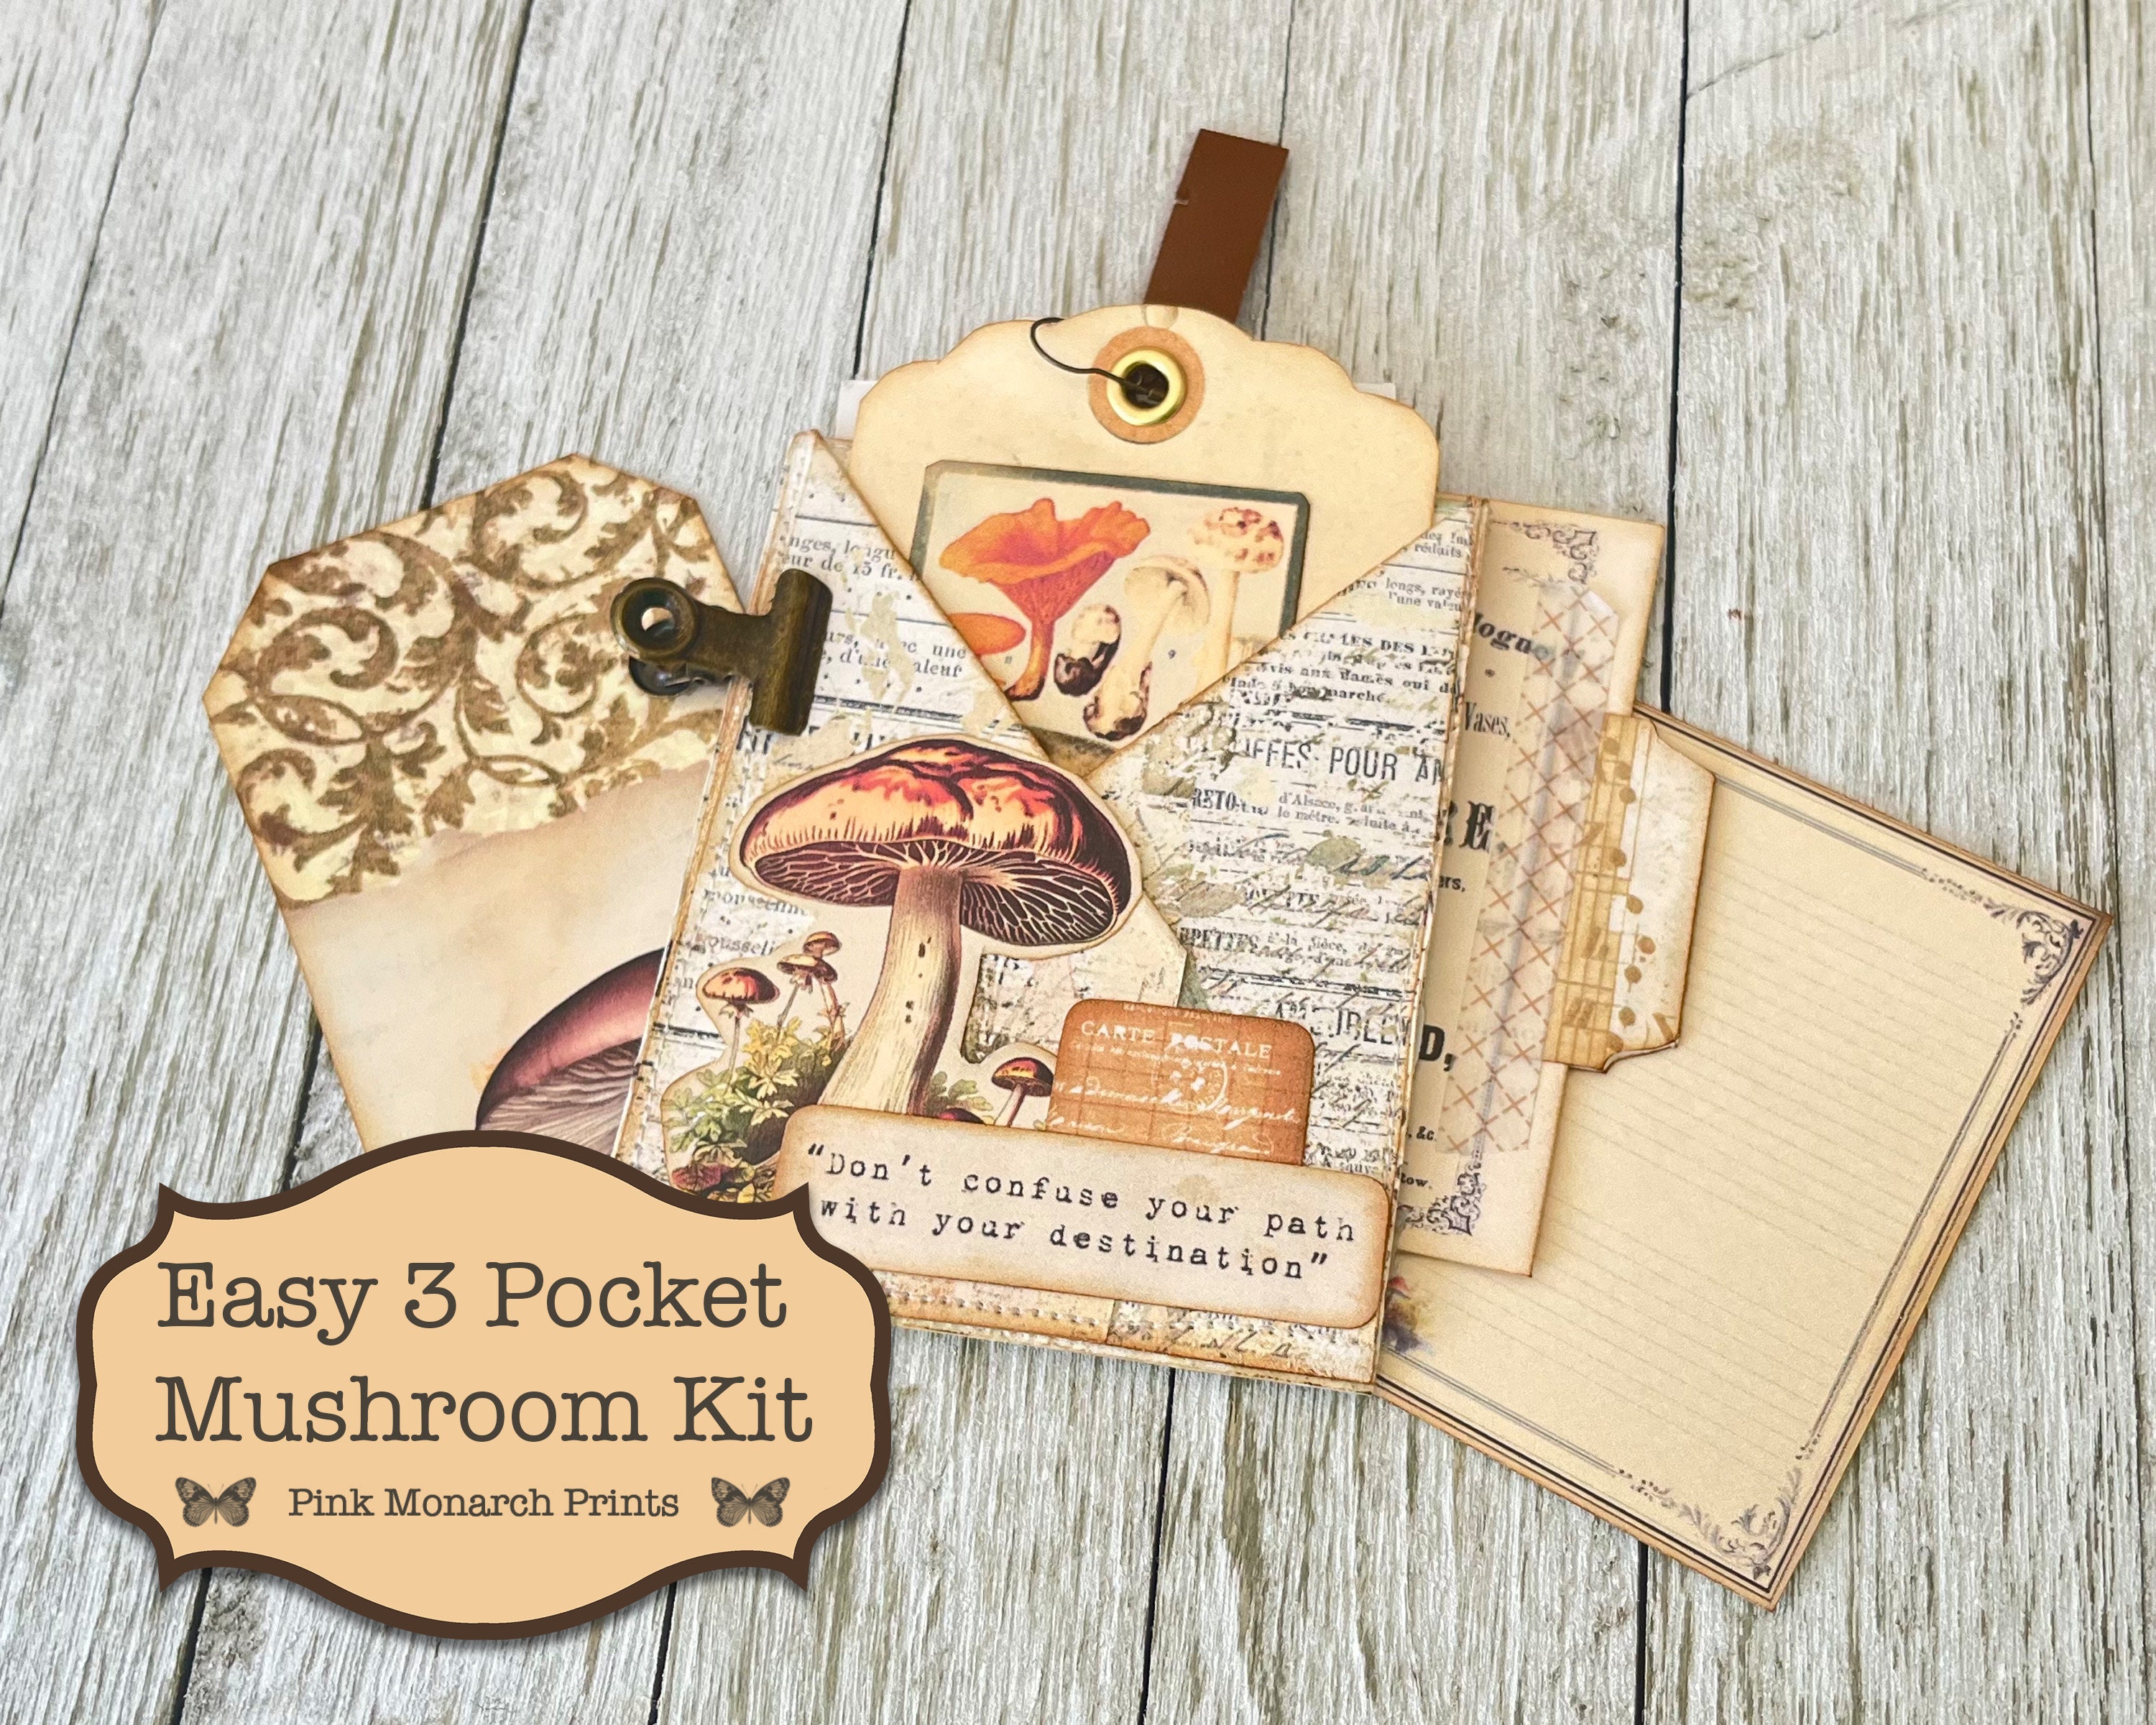 Ephemera Filled Junk Journal Pocket Handmade, With Vintage/Happy